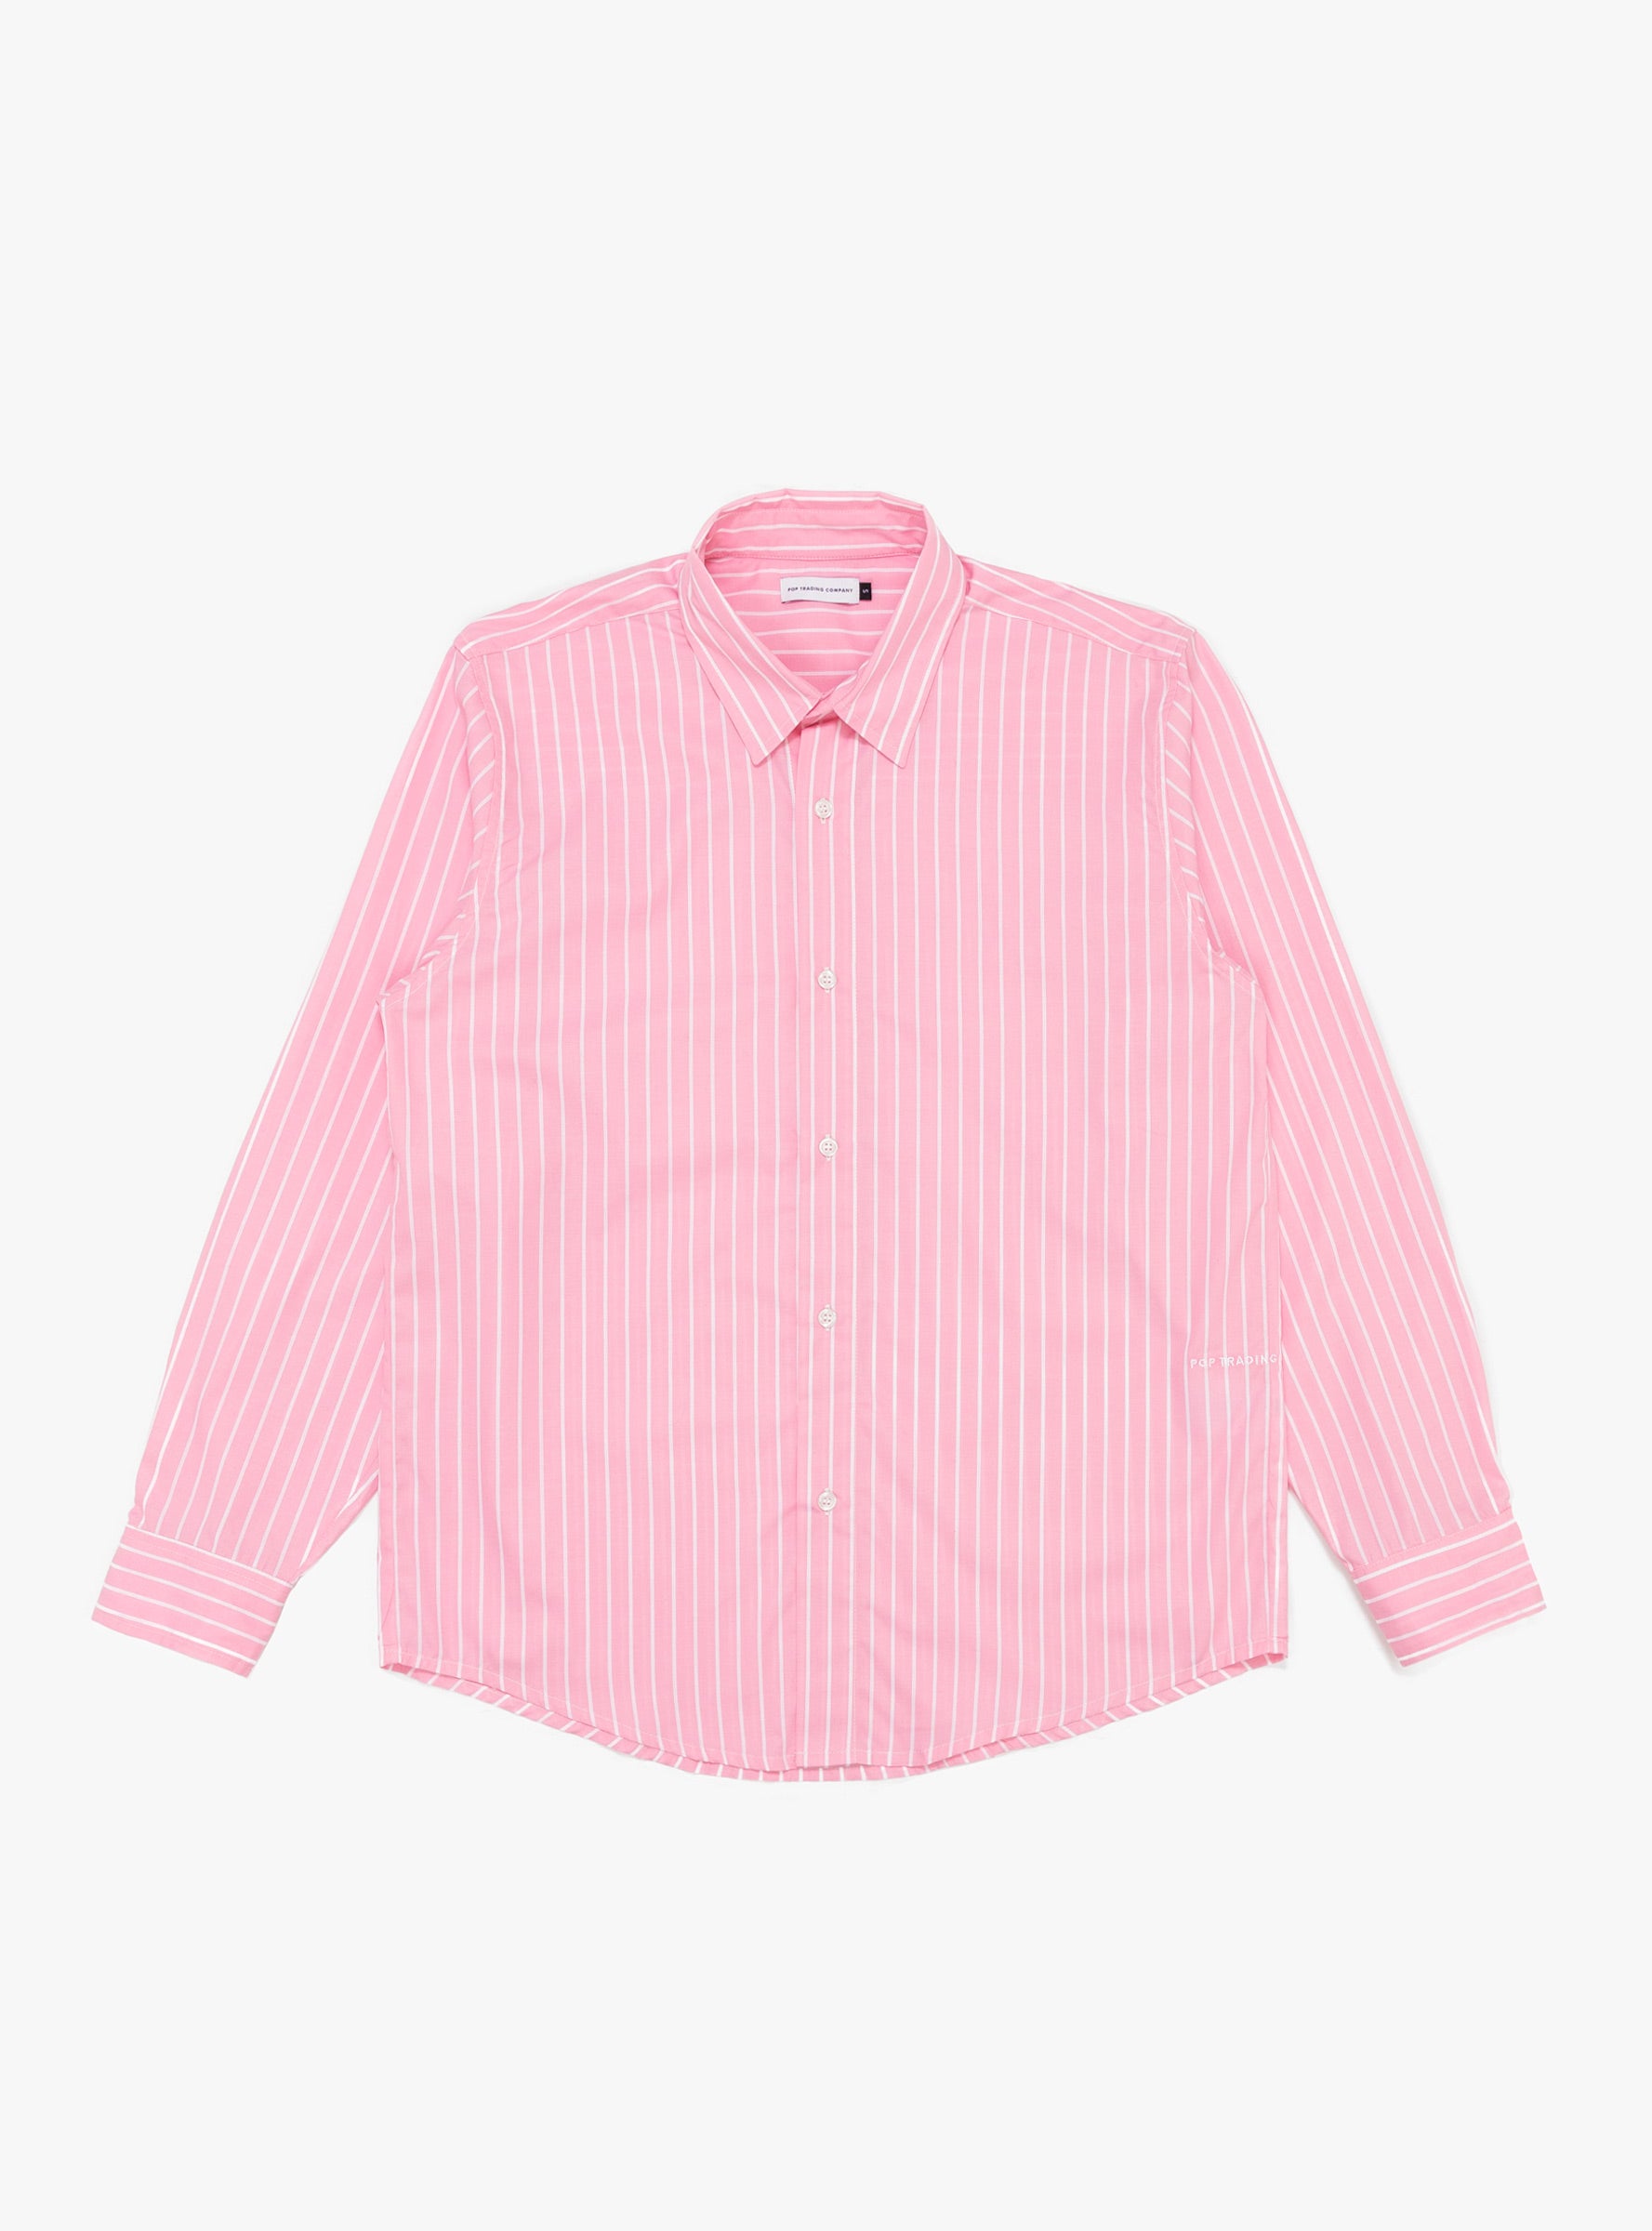 Pop Trading Company Pop Trading Company Logo Striped Shirt Pink - Size: Medium